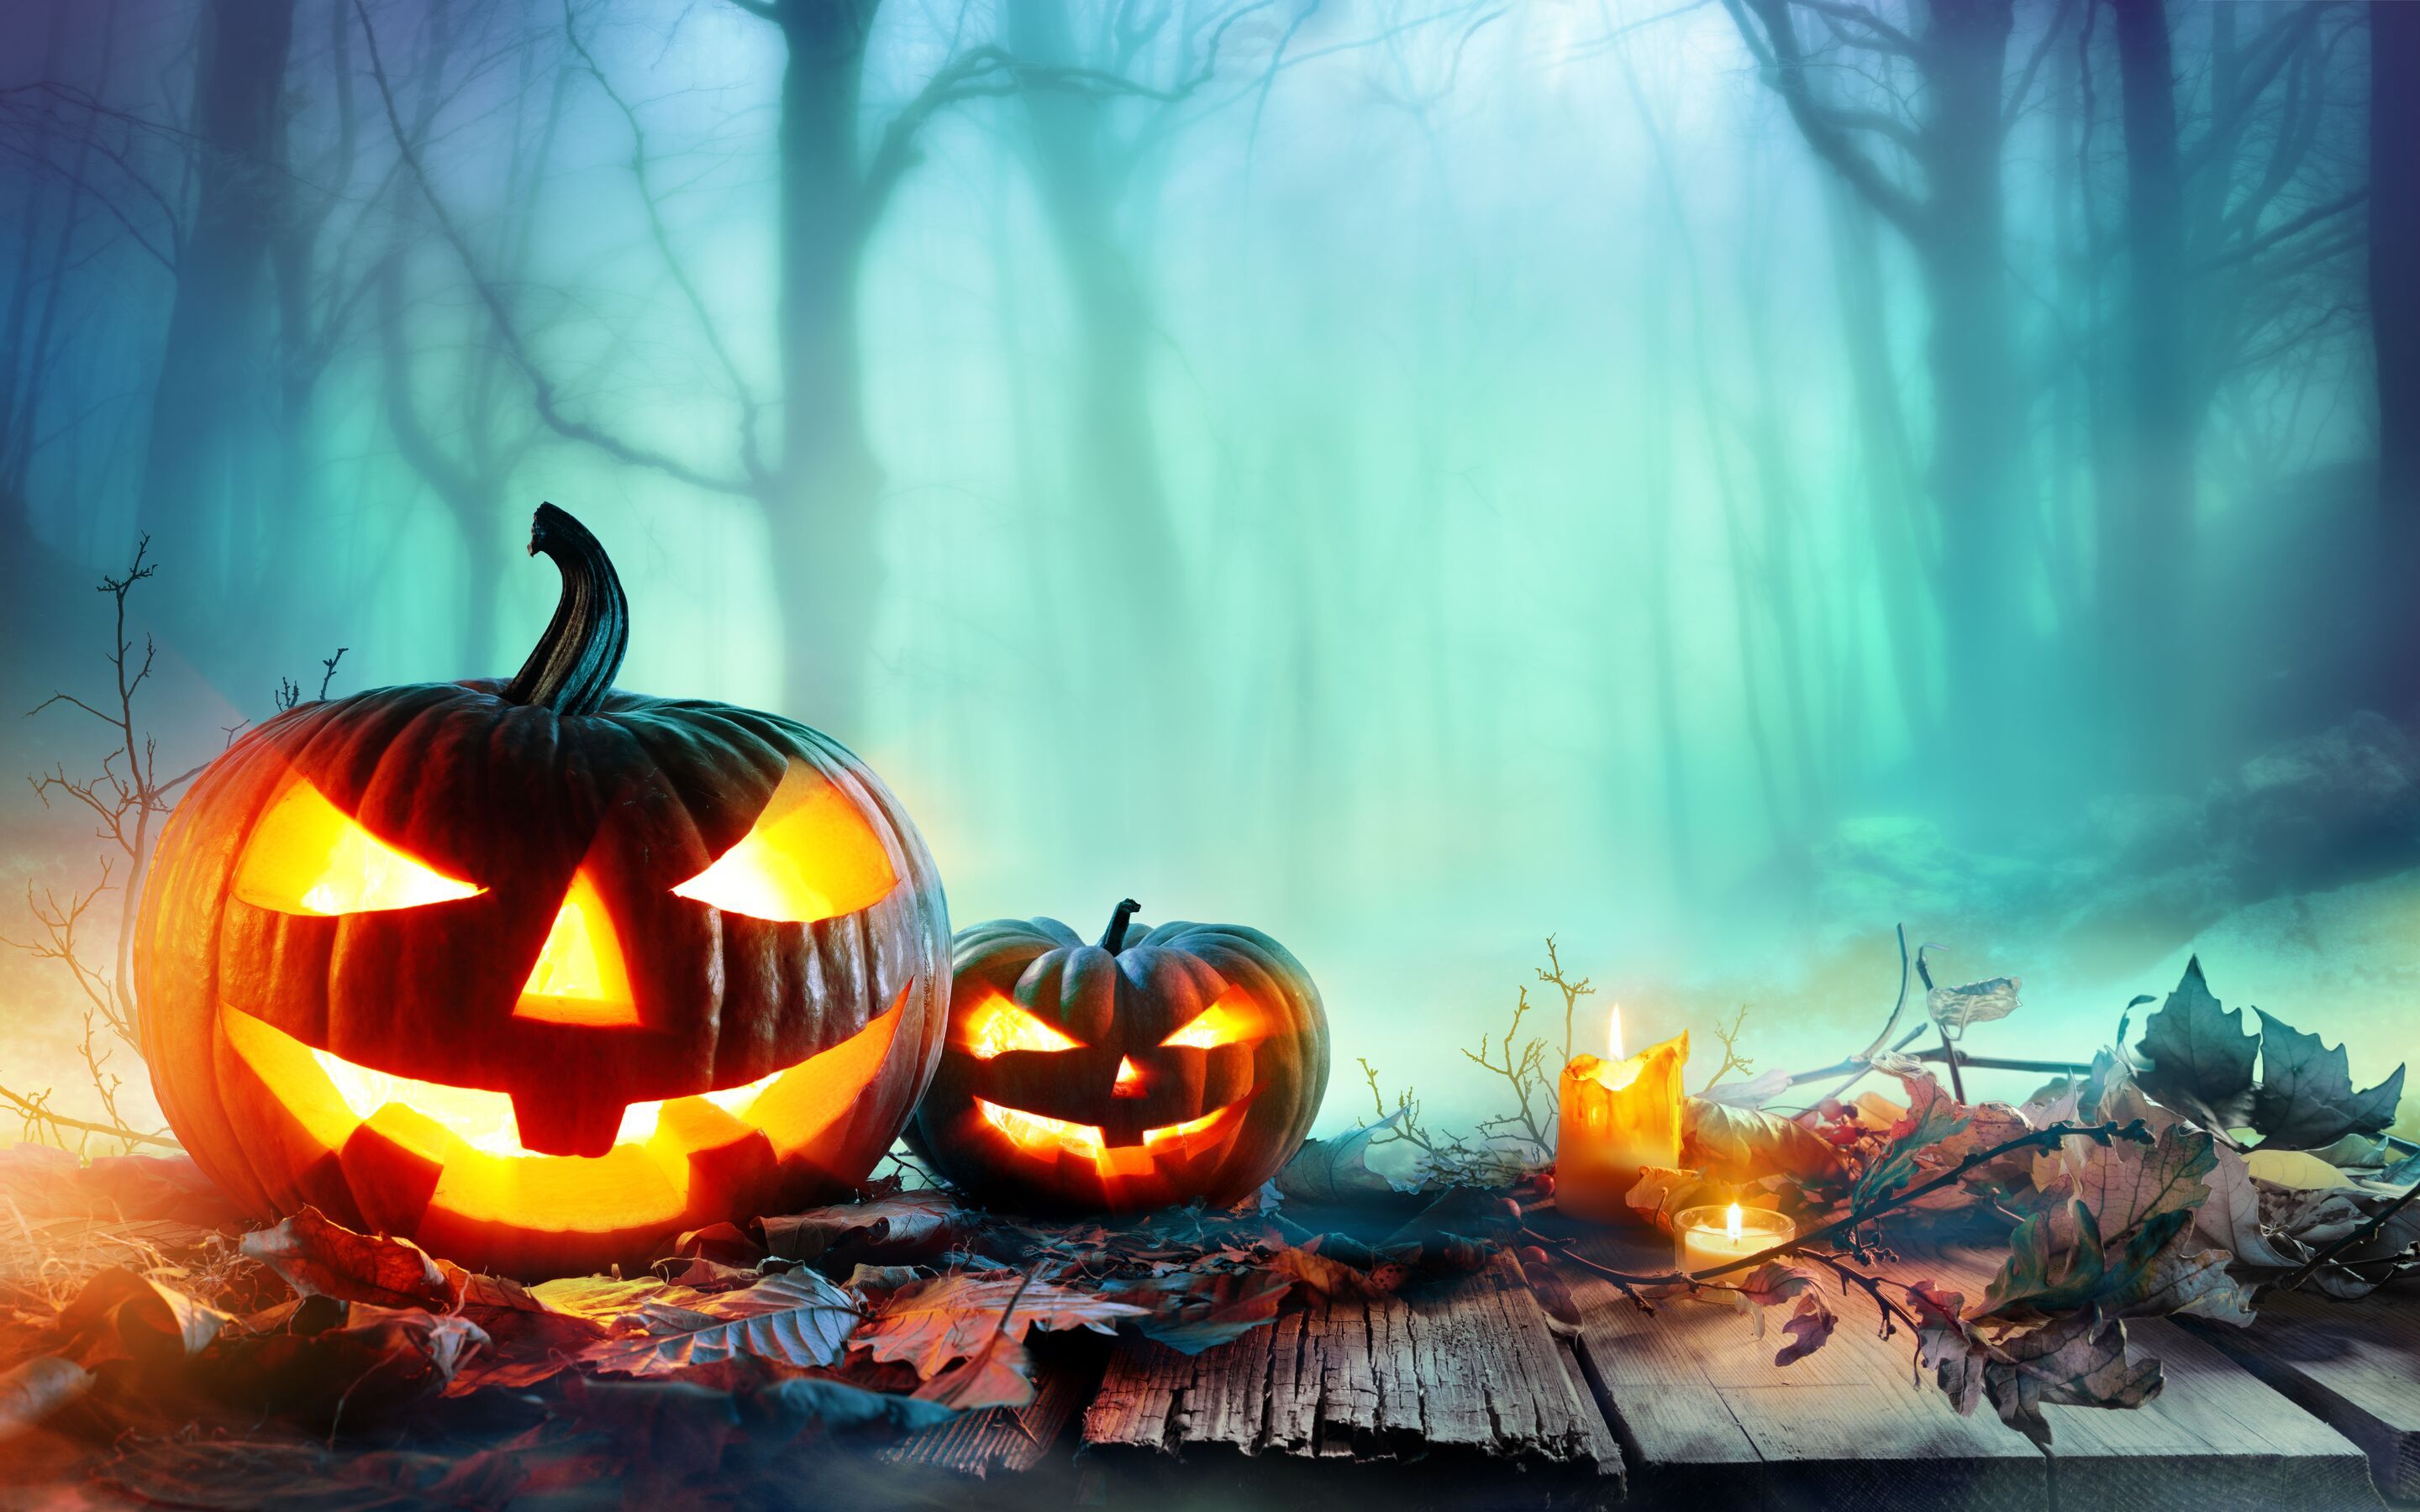 8k Halloween Macbook Pro Retina HD 4k Wallpaper, Image, Background, Photo and Picture